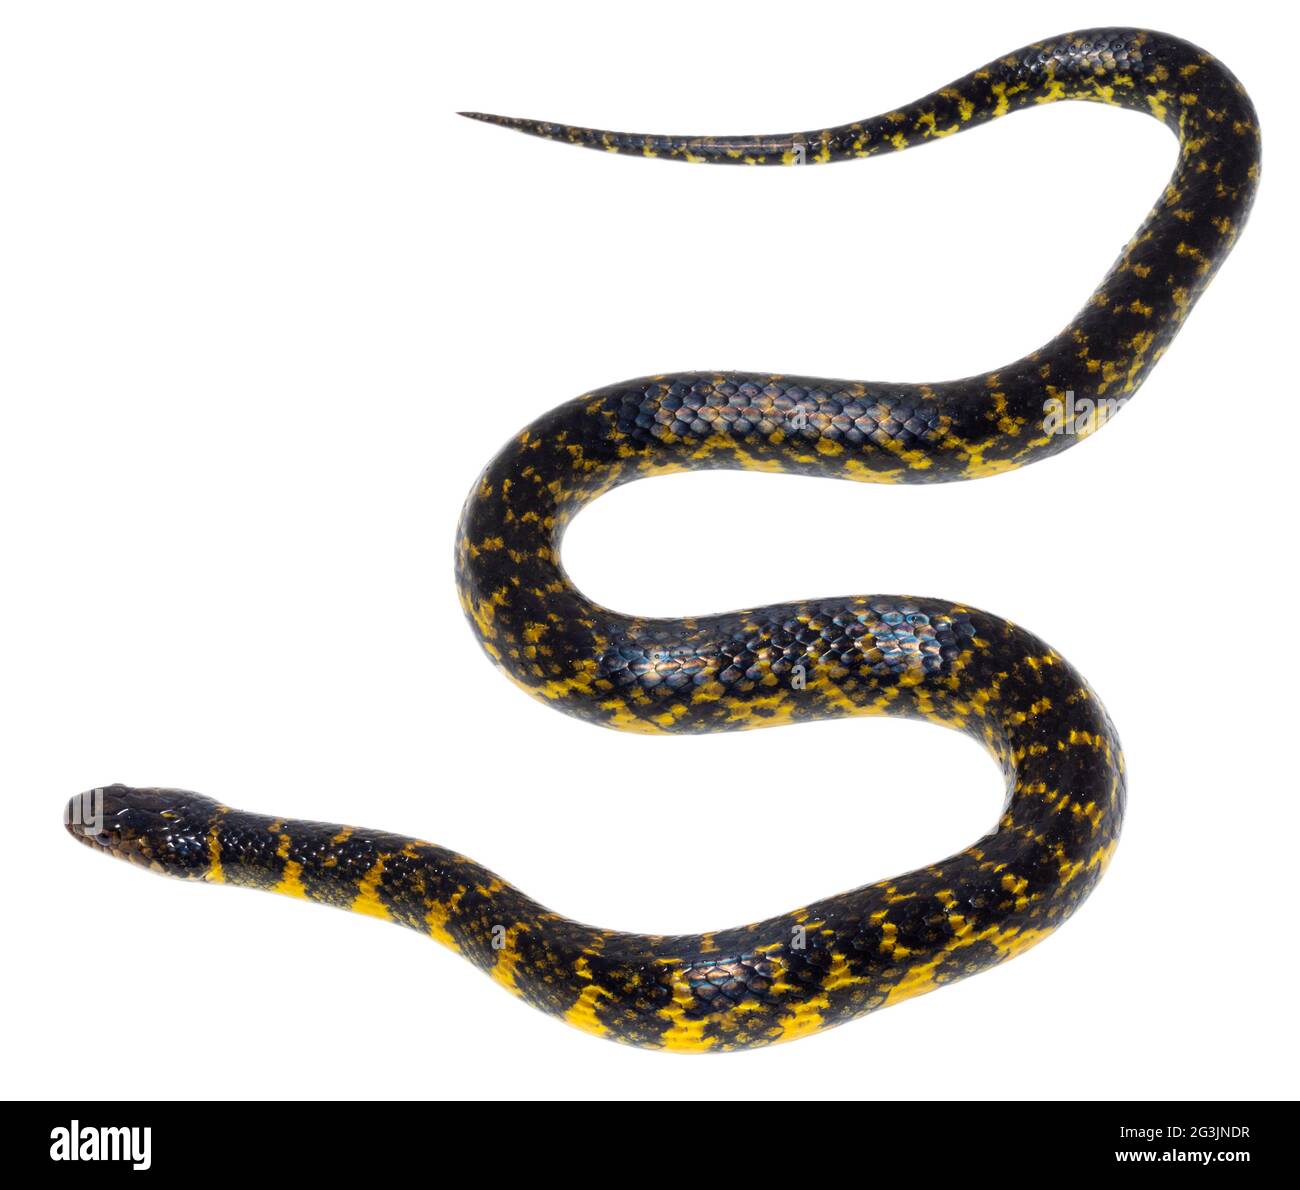 Aquatic colubrid snake (Erythrolamprus taeniogaster), Orellana province, Ecuador Stock Photo